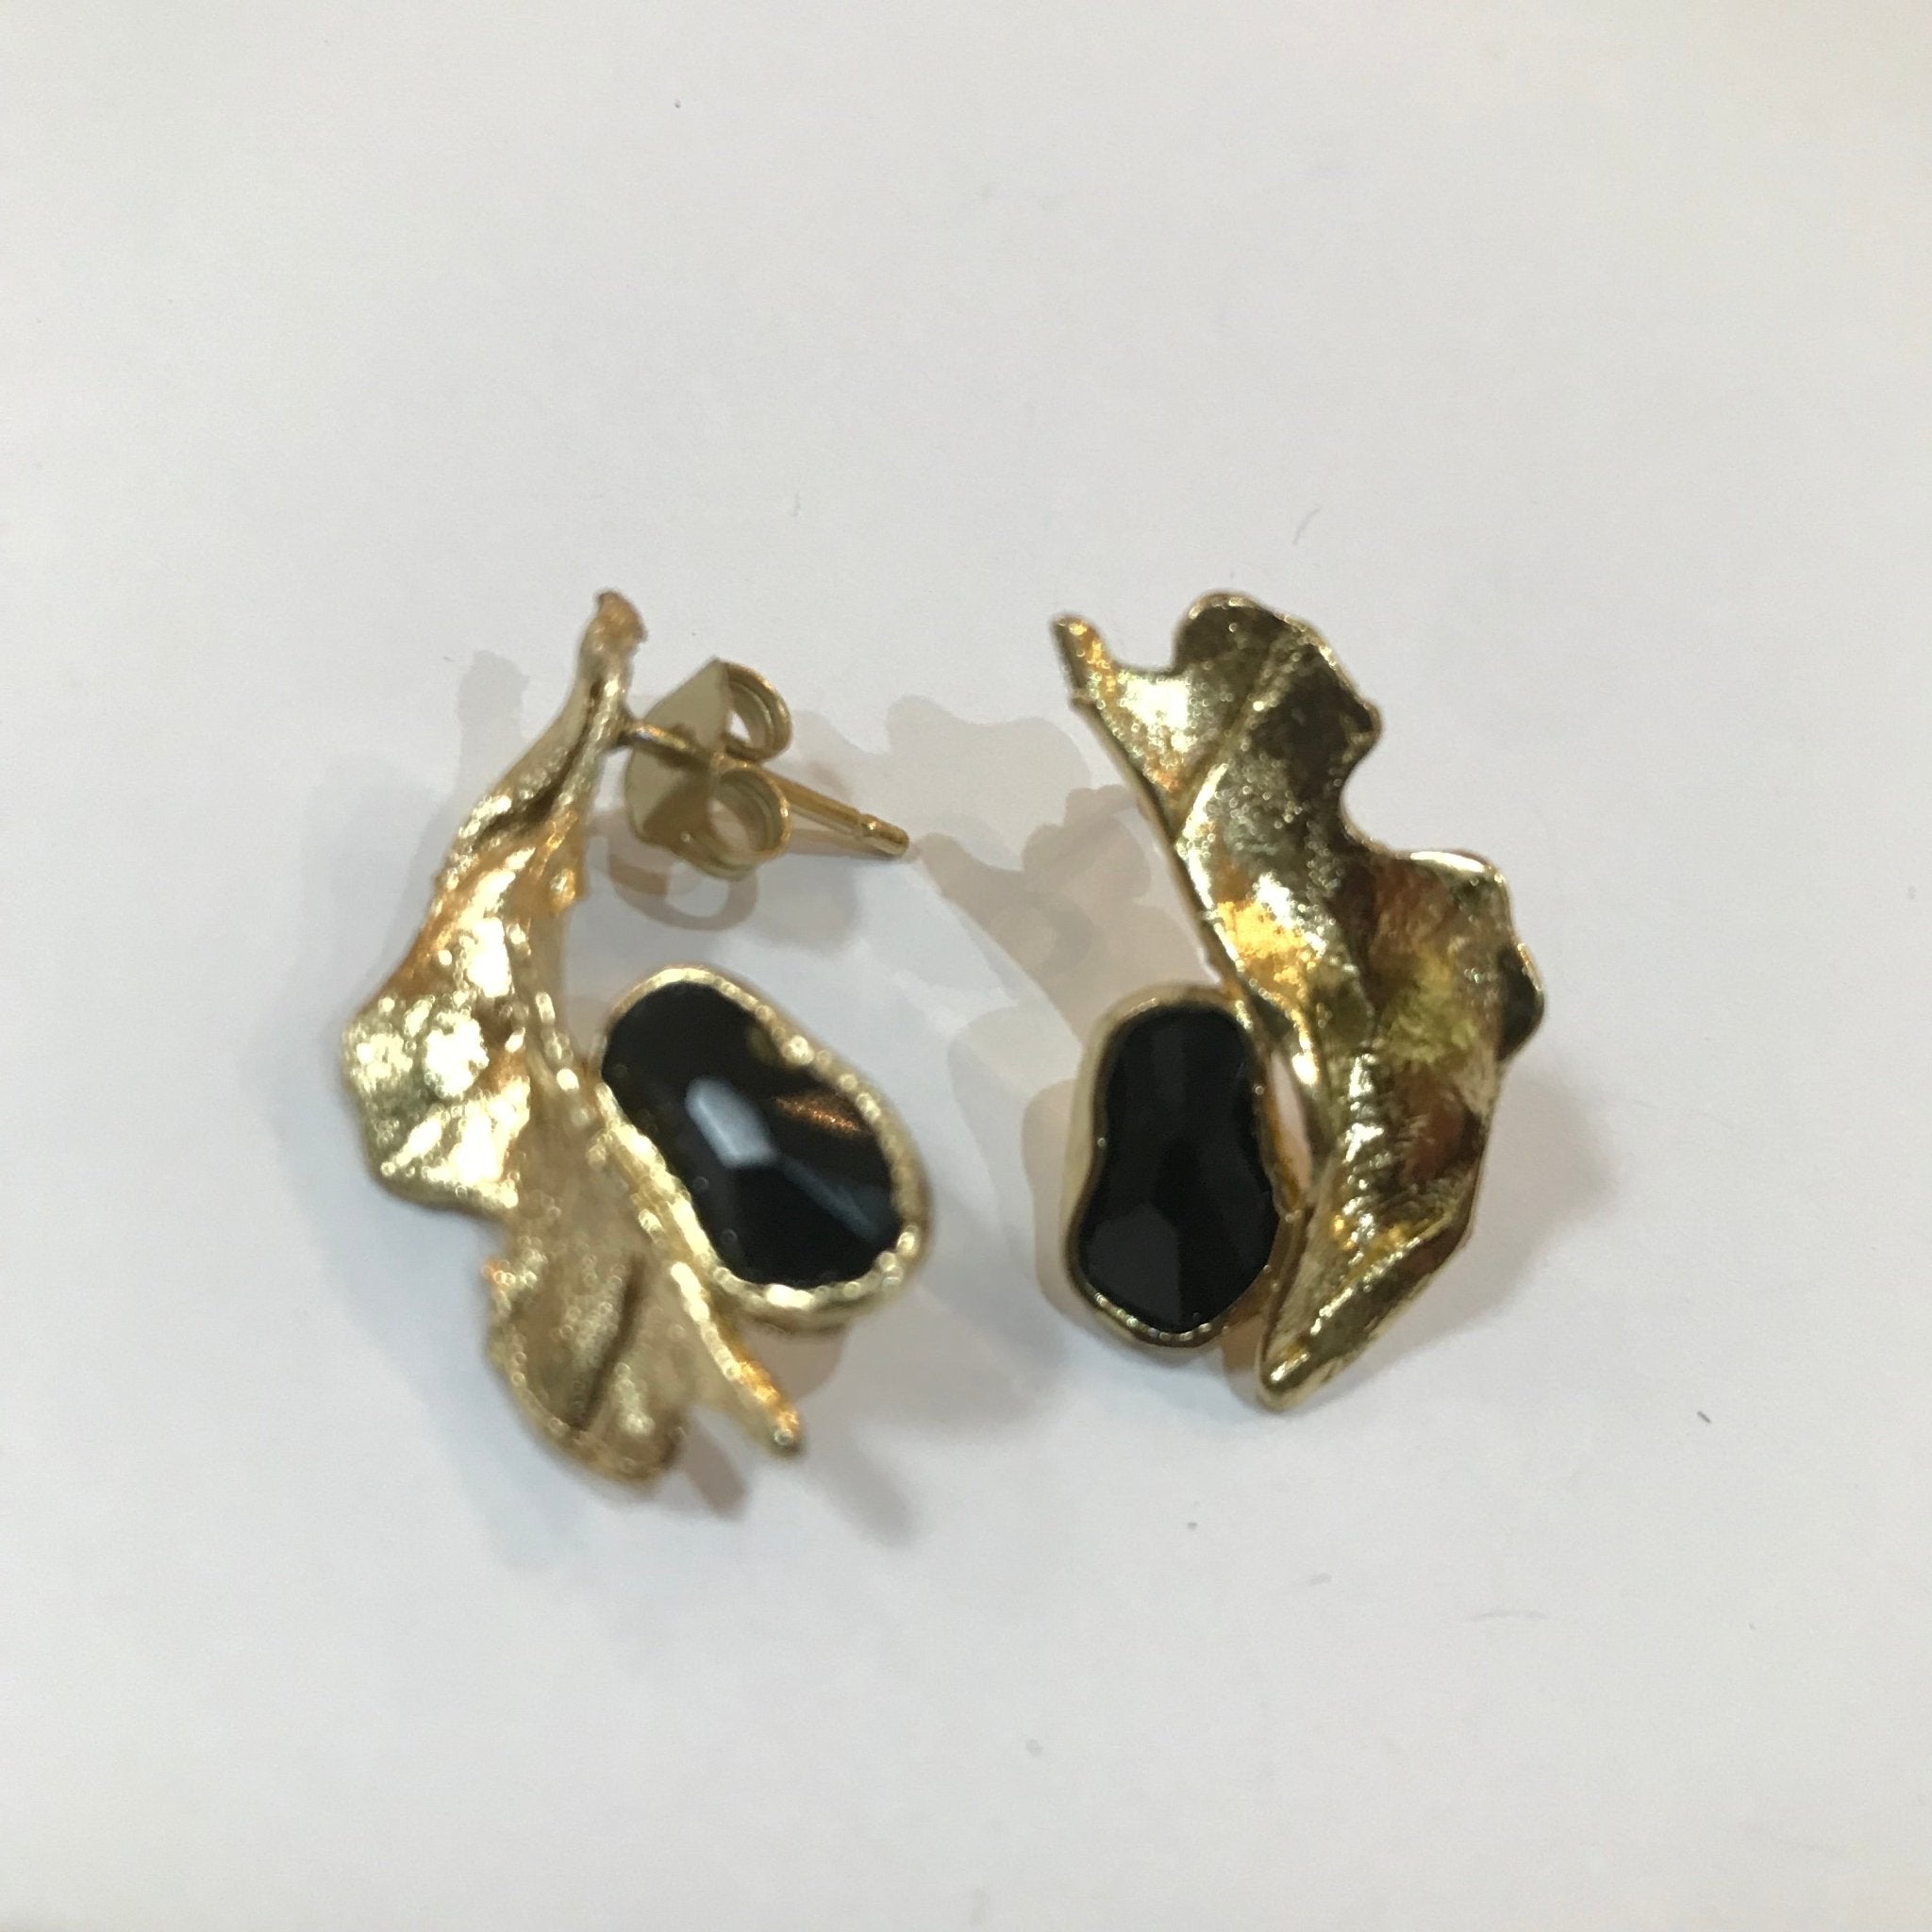 Bronze Black Earrings - The Nancy Smillie Shop - Art, Jewellery & Designer Gifts Glasgow